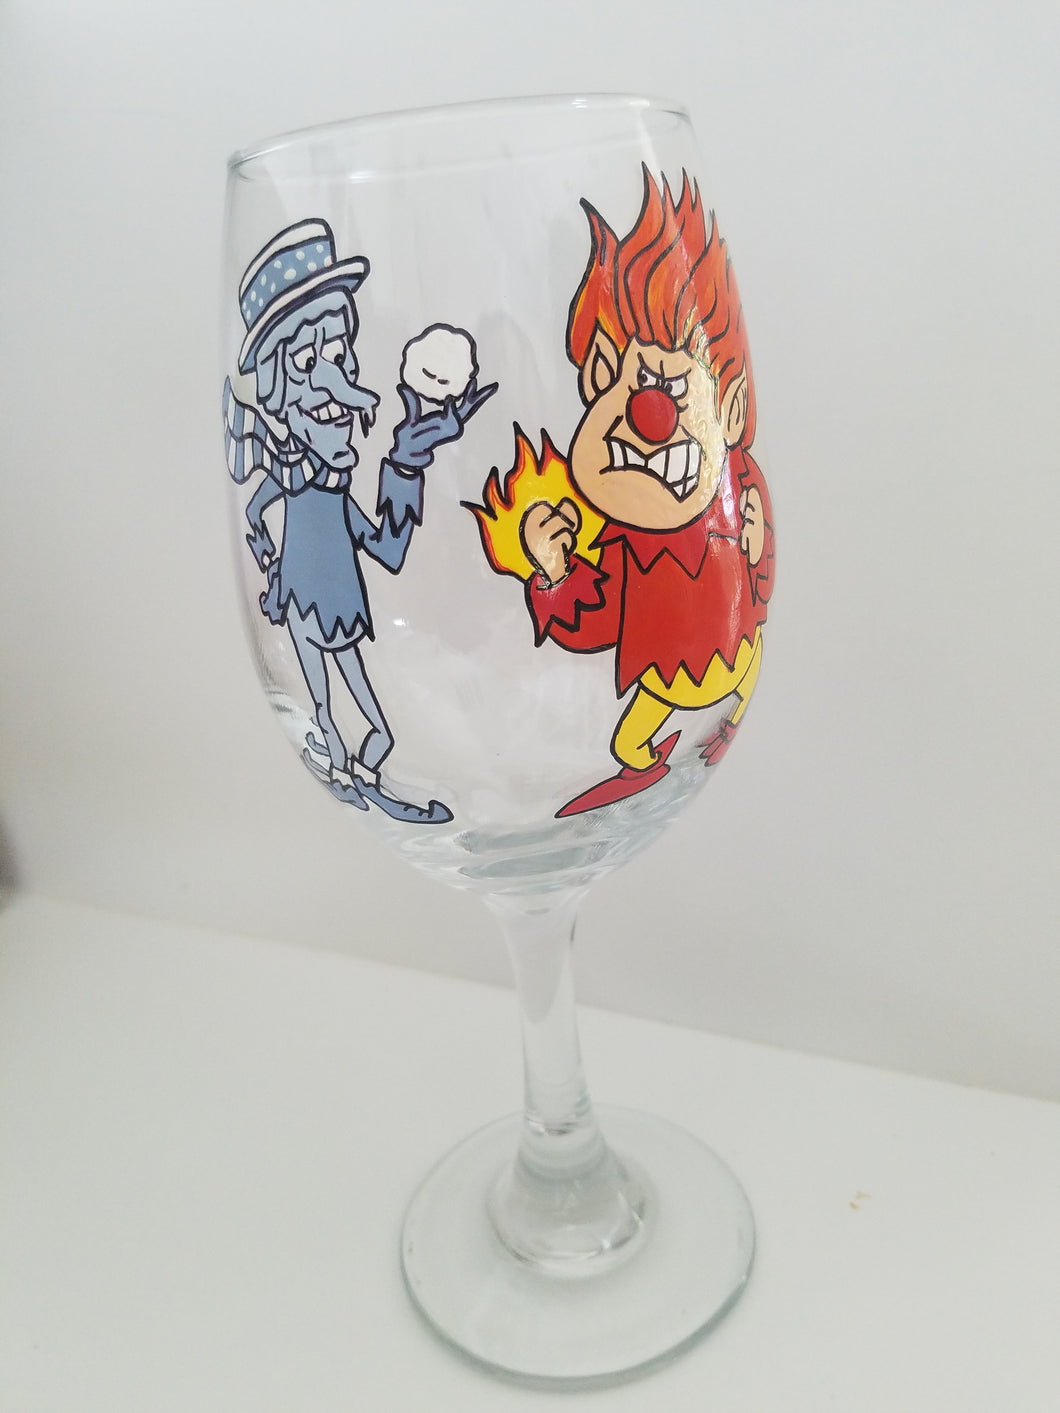 Heat Miser Snow Miser hand-painted wine glass